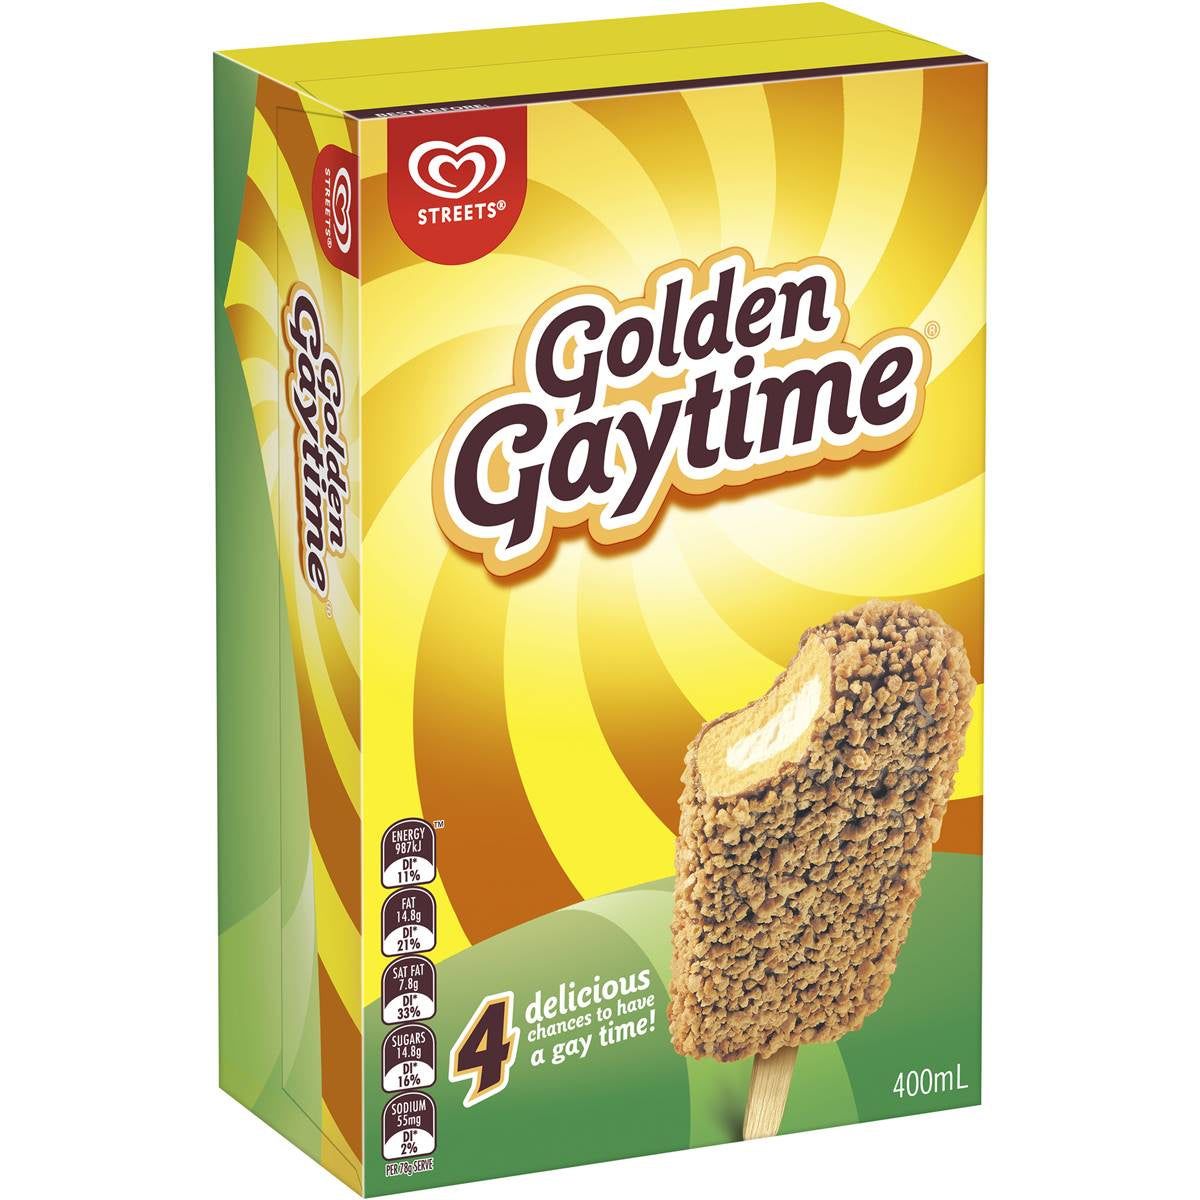 Streets Golden Gaytime Ice Cream Original 4 Pack